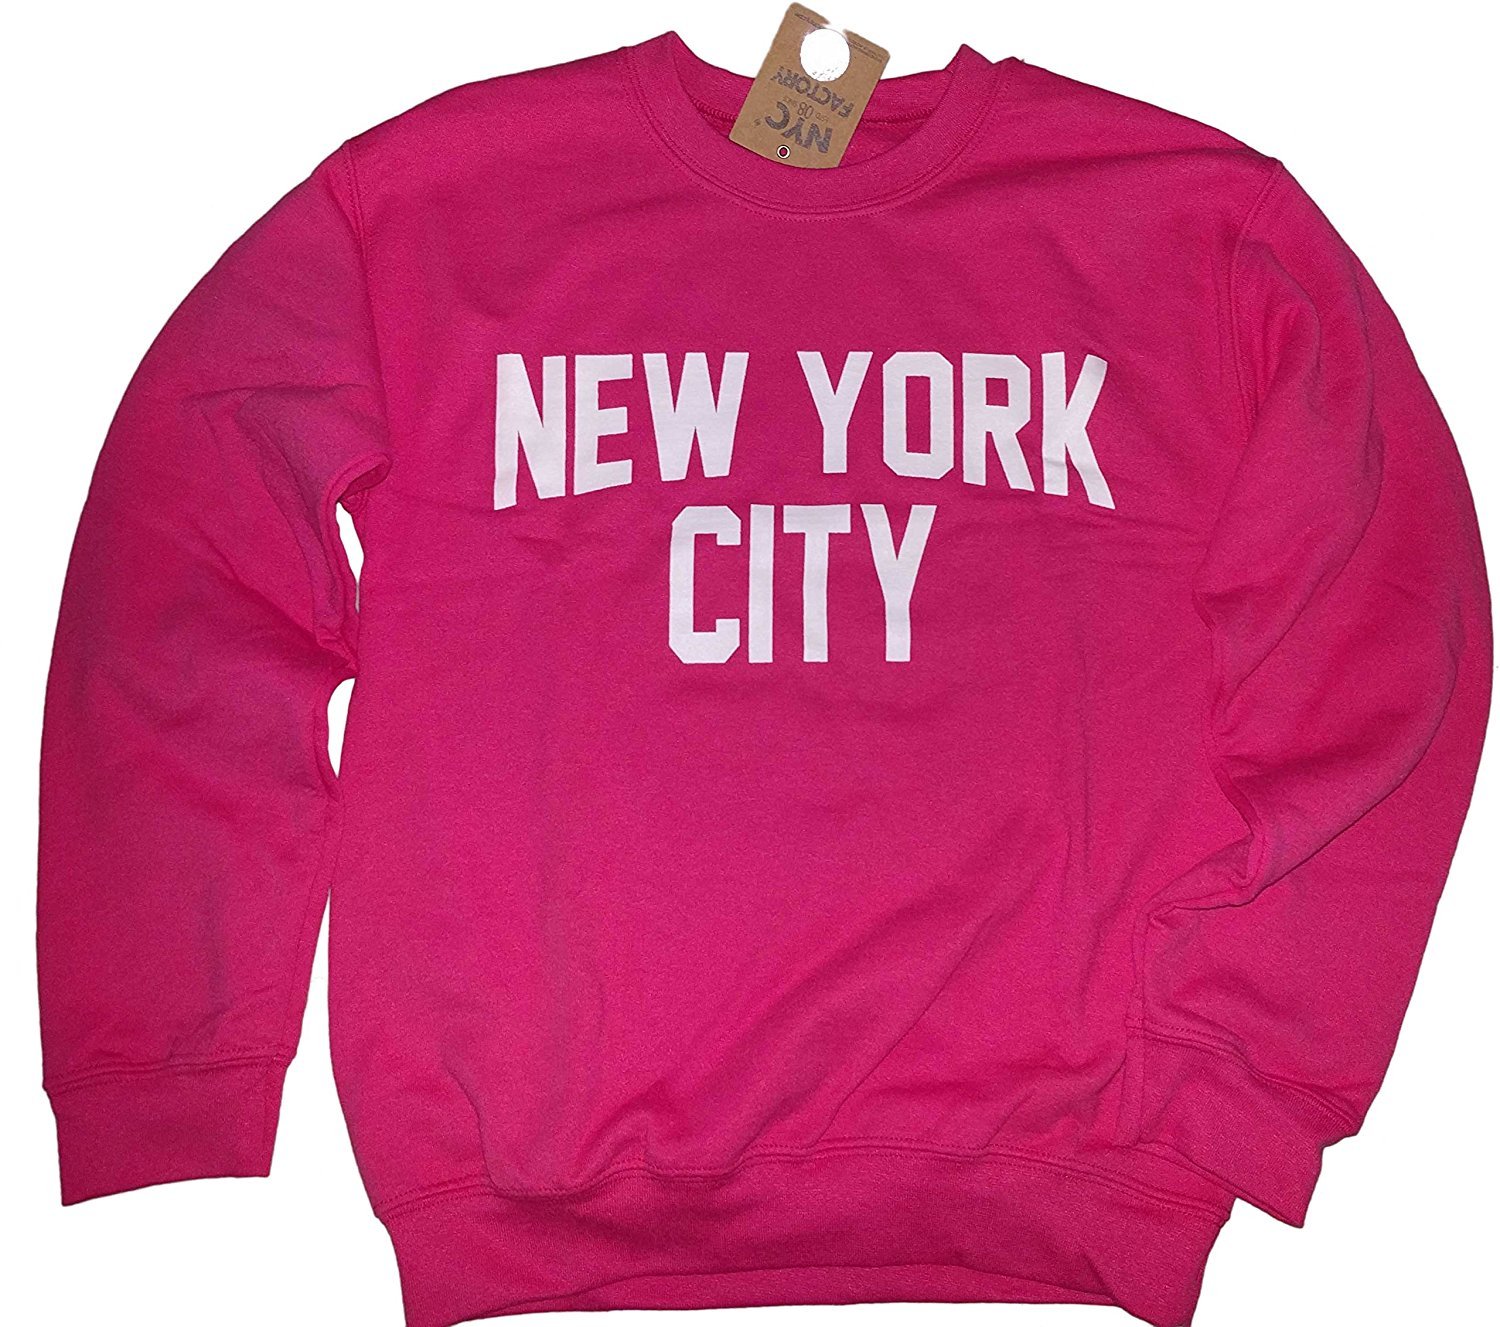 New York City Sweatshirt Screenprinted Hot Pink Adult NYC Lennon Shirt